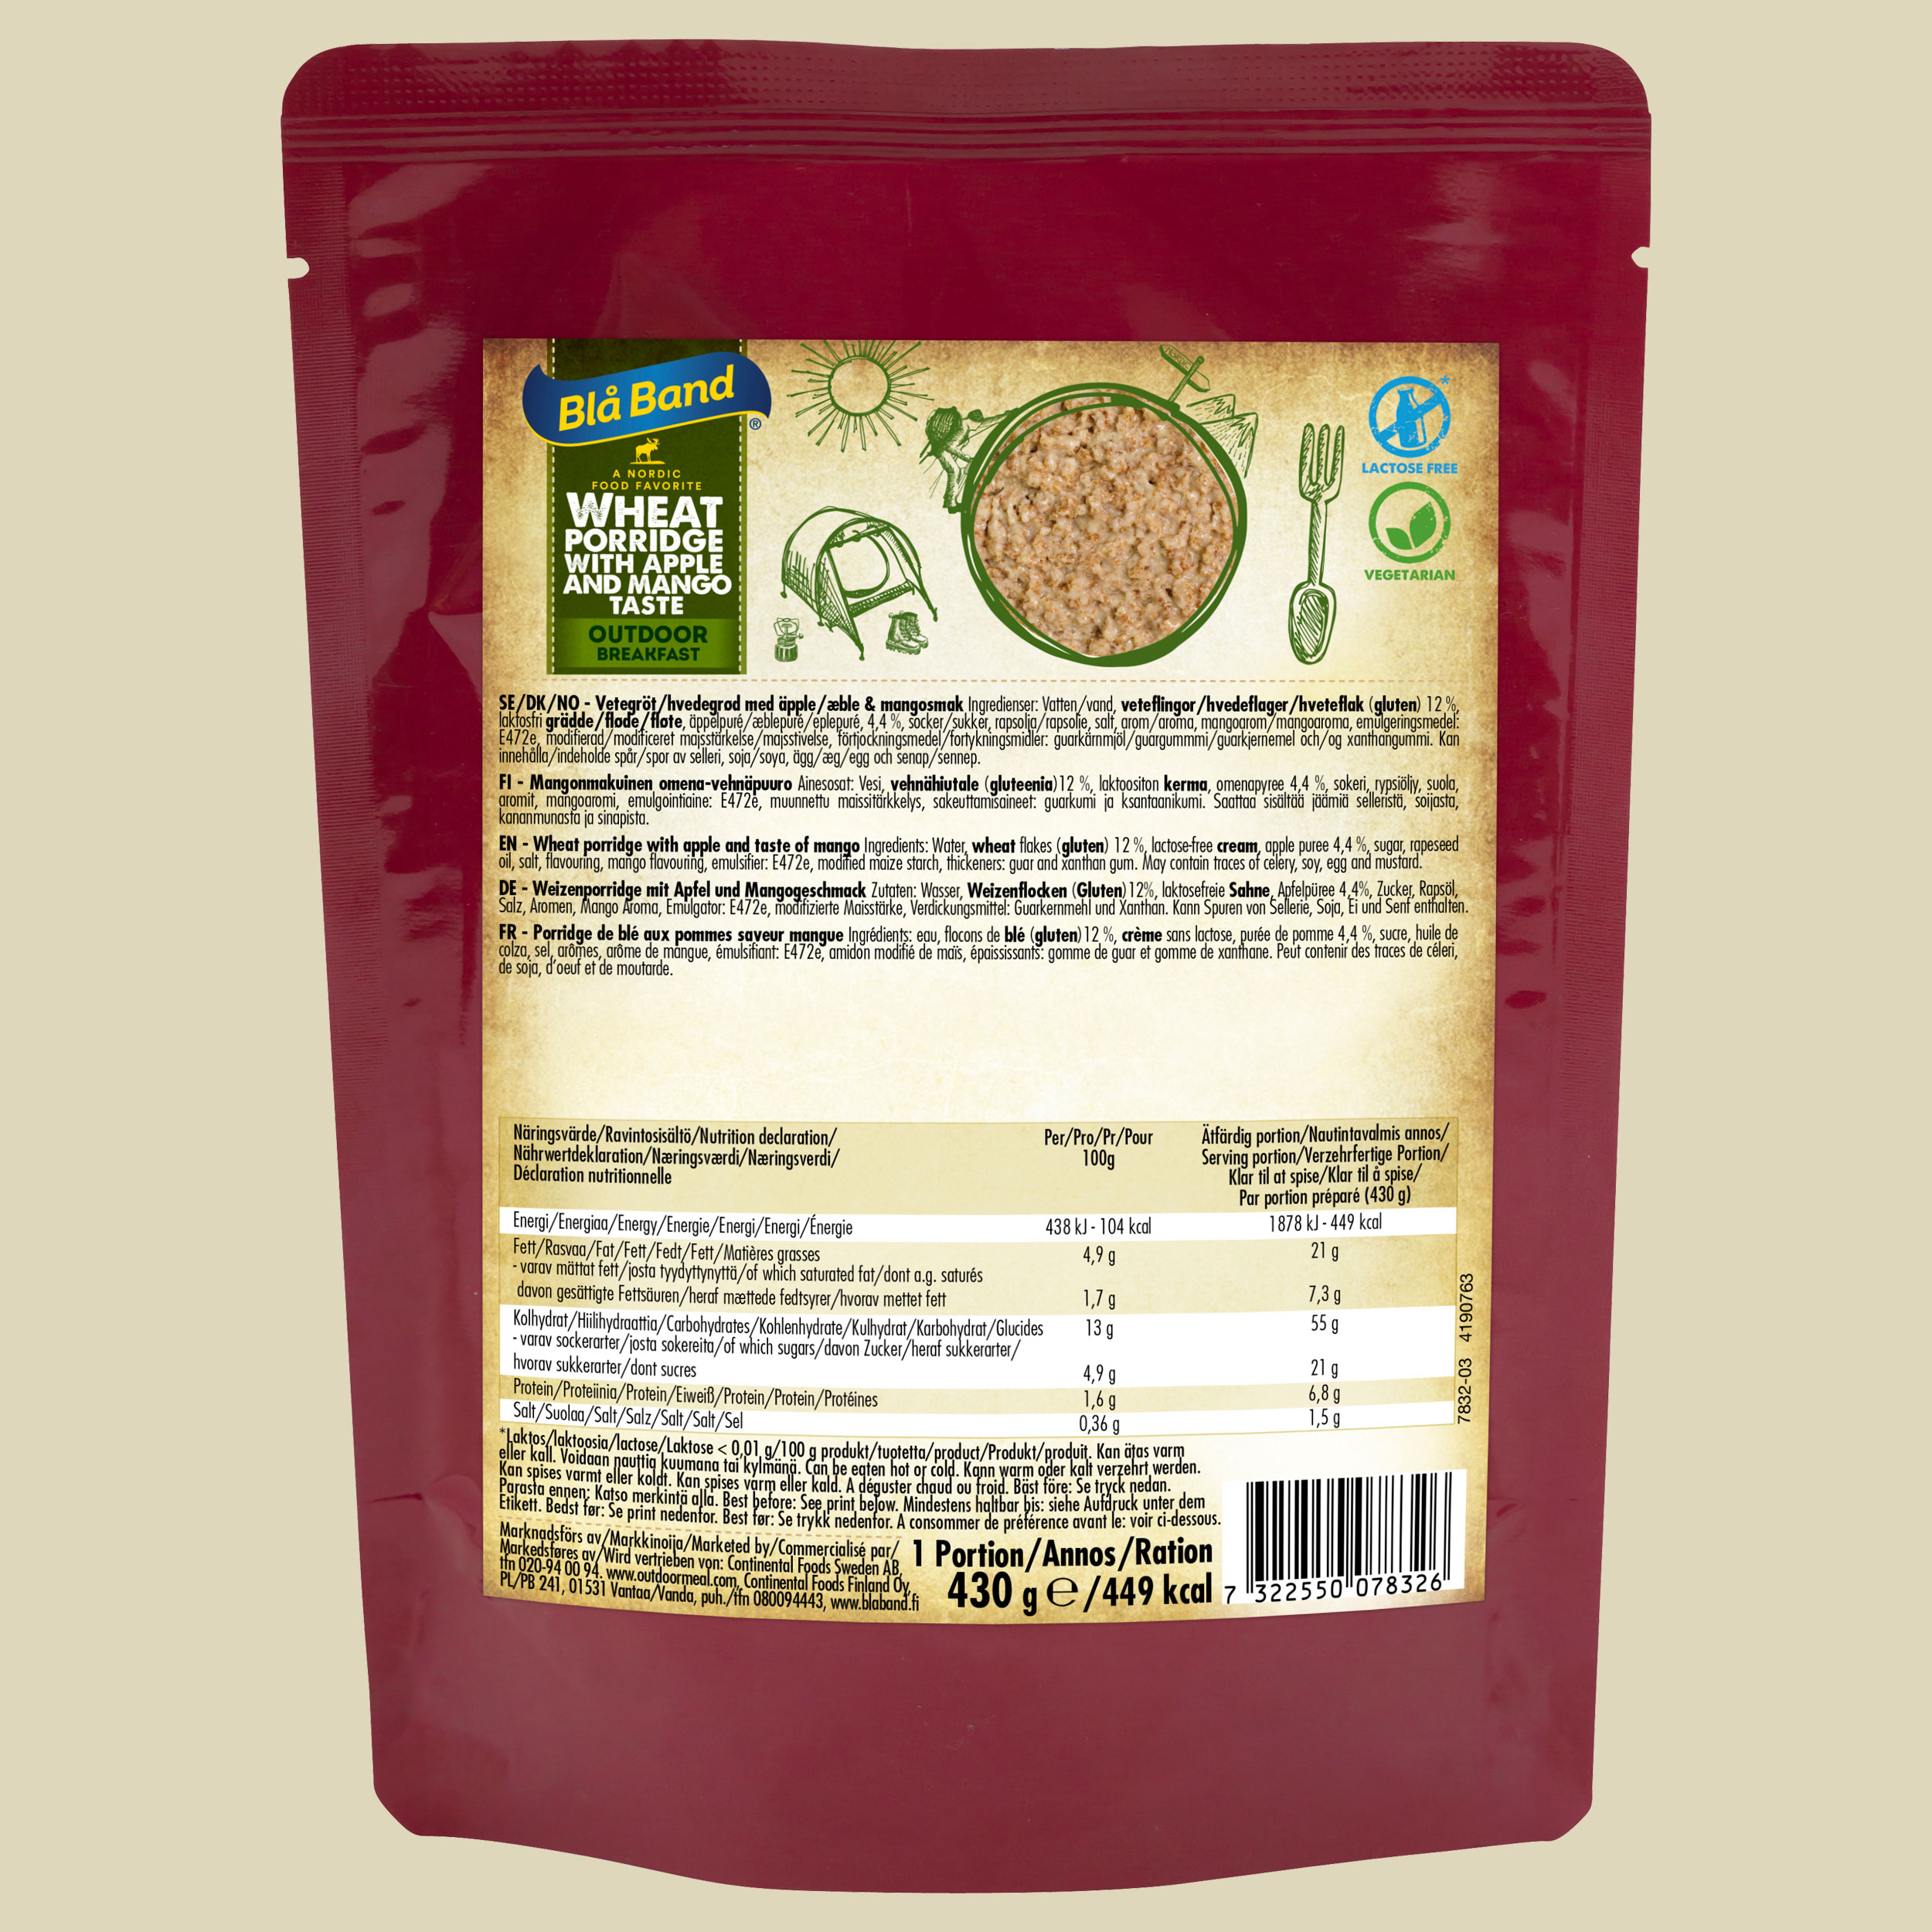 Wheat Porridge with Apple and Mango Taste 430g 447 kcal